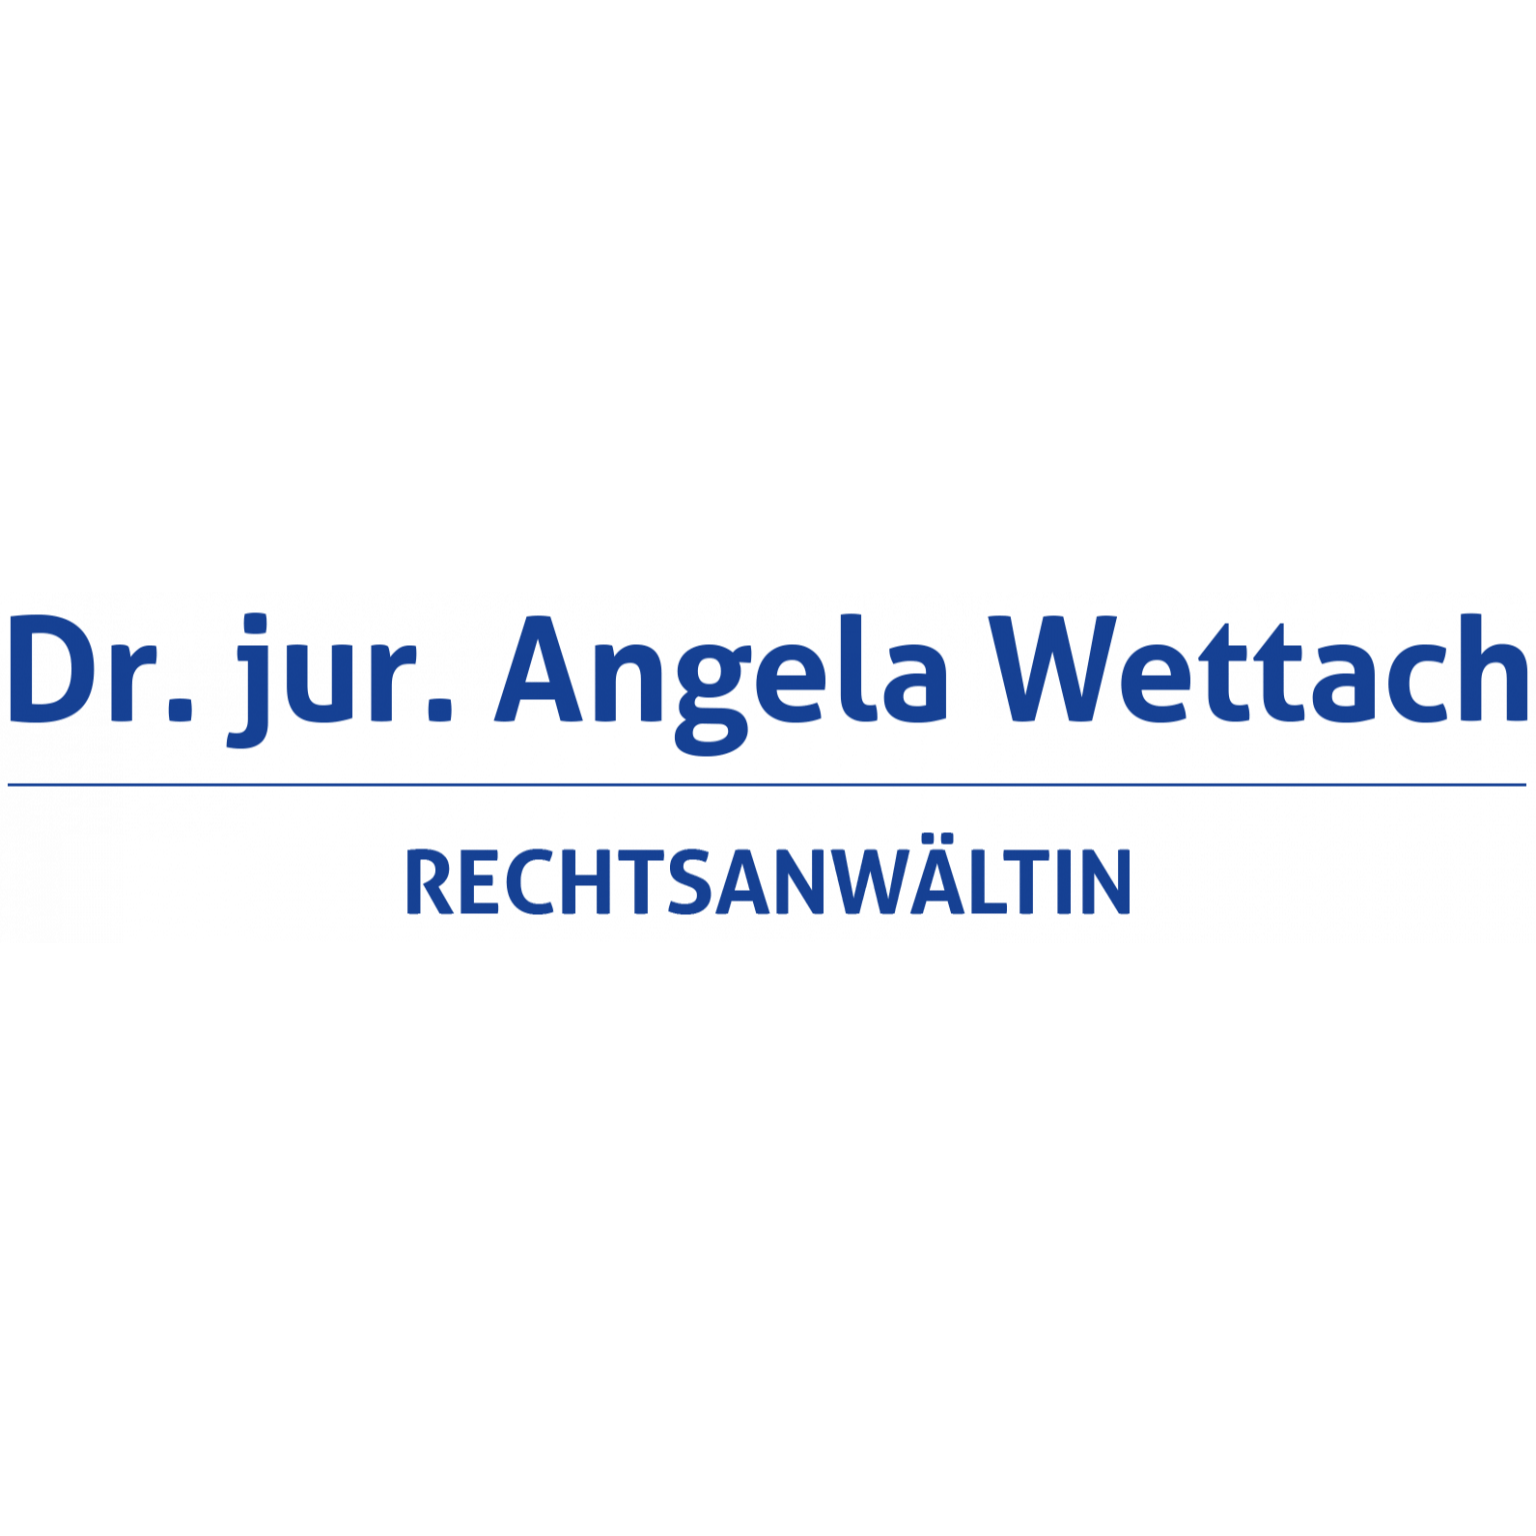 Angela Wettach Rechtsanwältin - Legal Services - Naumburg - 03445 676792 Germany | ShowMeLocal.com